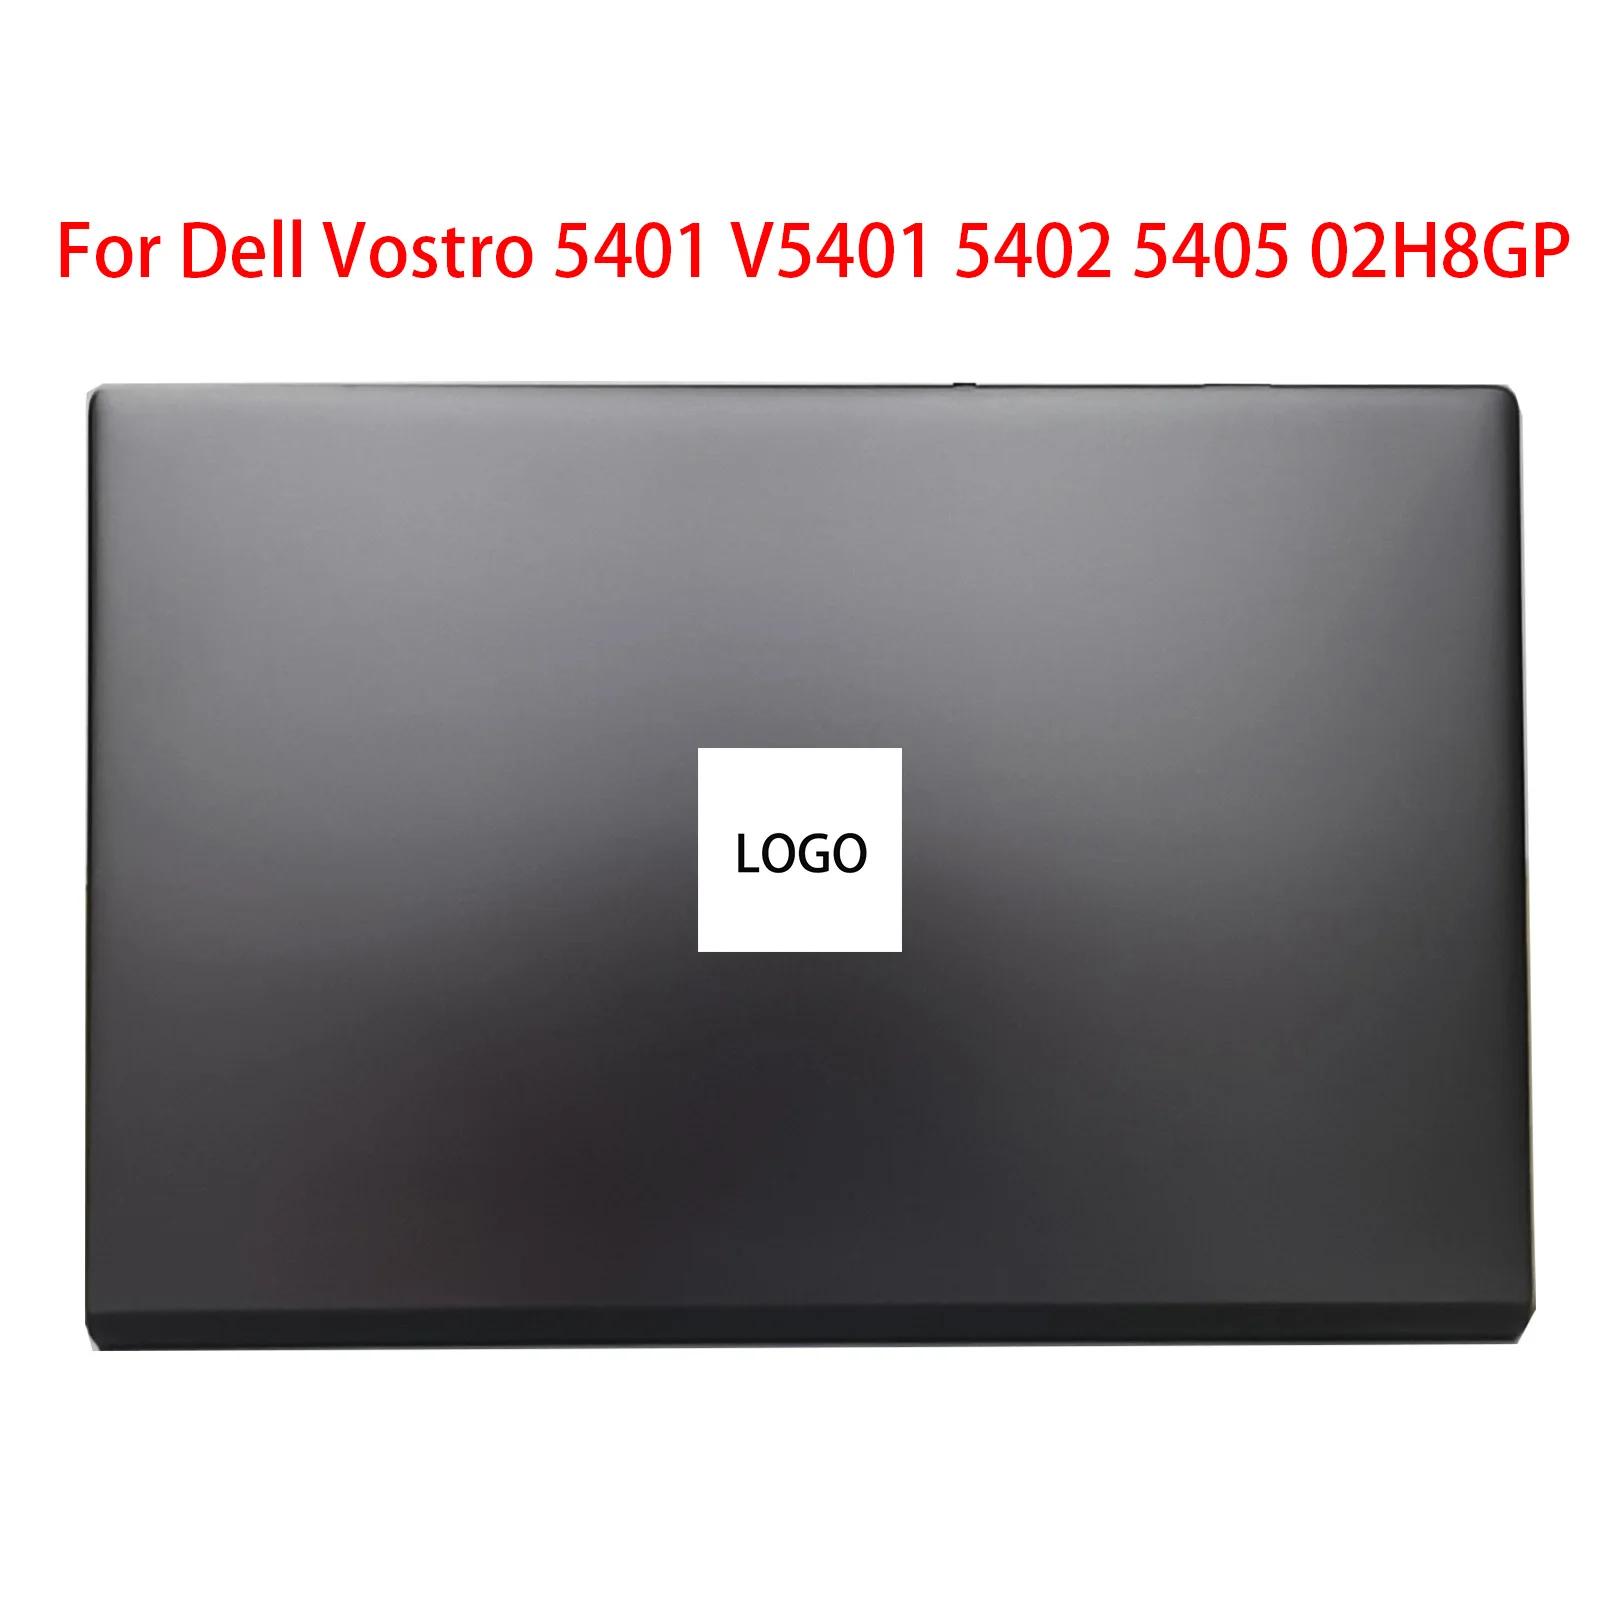 Dell Vostro 5401 V5401  Ʈ LCD ĸ Ŀ Ѳ, 5402 5405 02H8GP ׷, ǰ